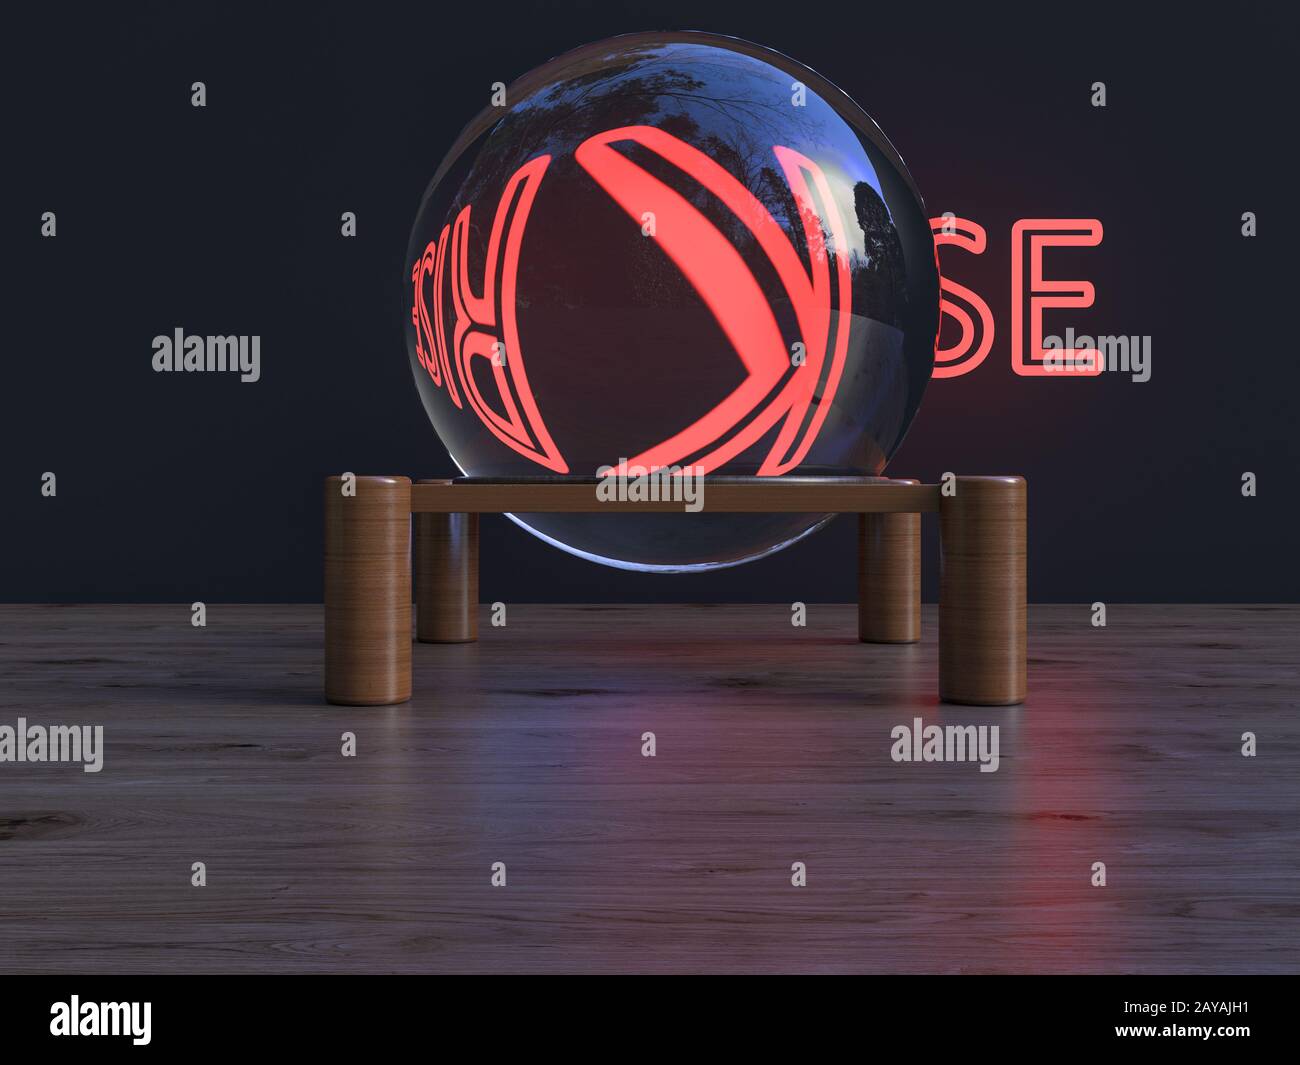 Quarz sphere enlarging the word Krise (German for crisis) Stock Photo